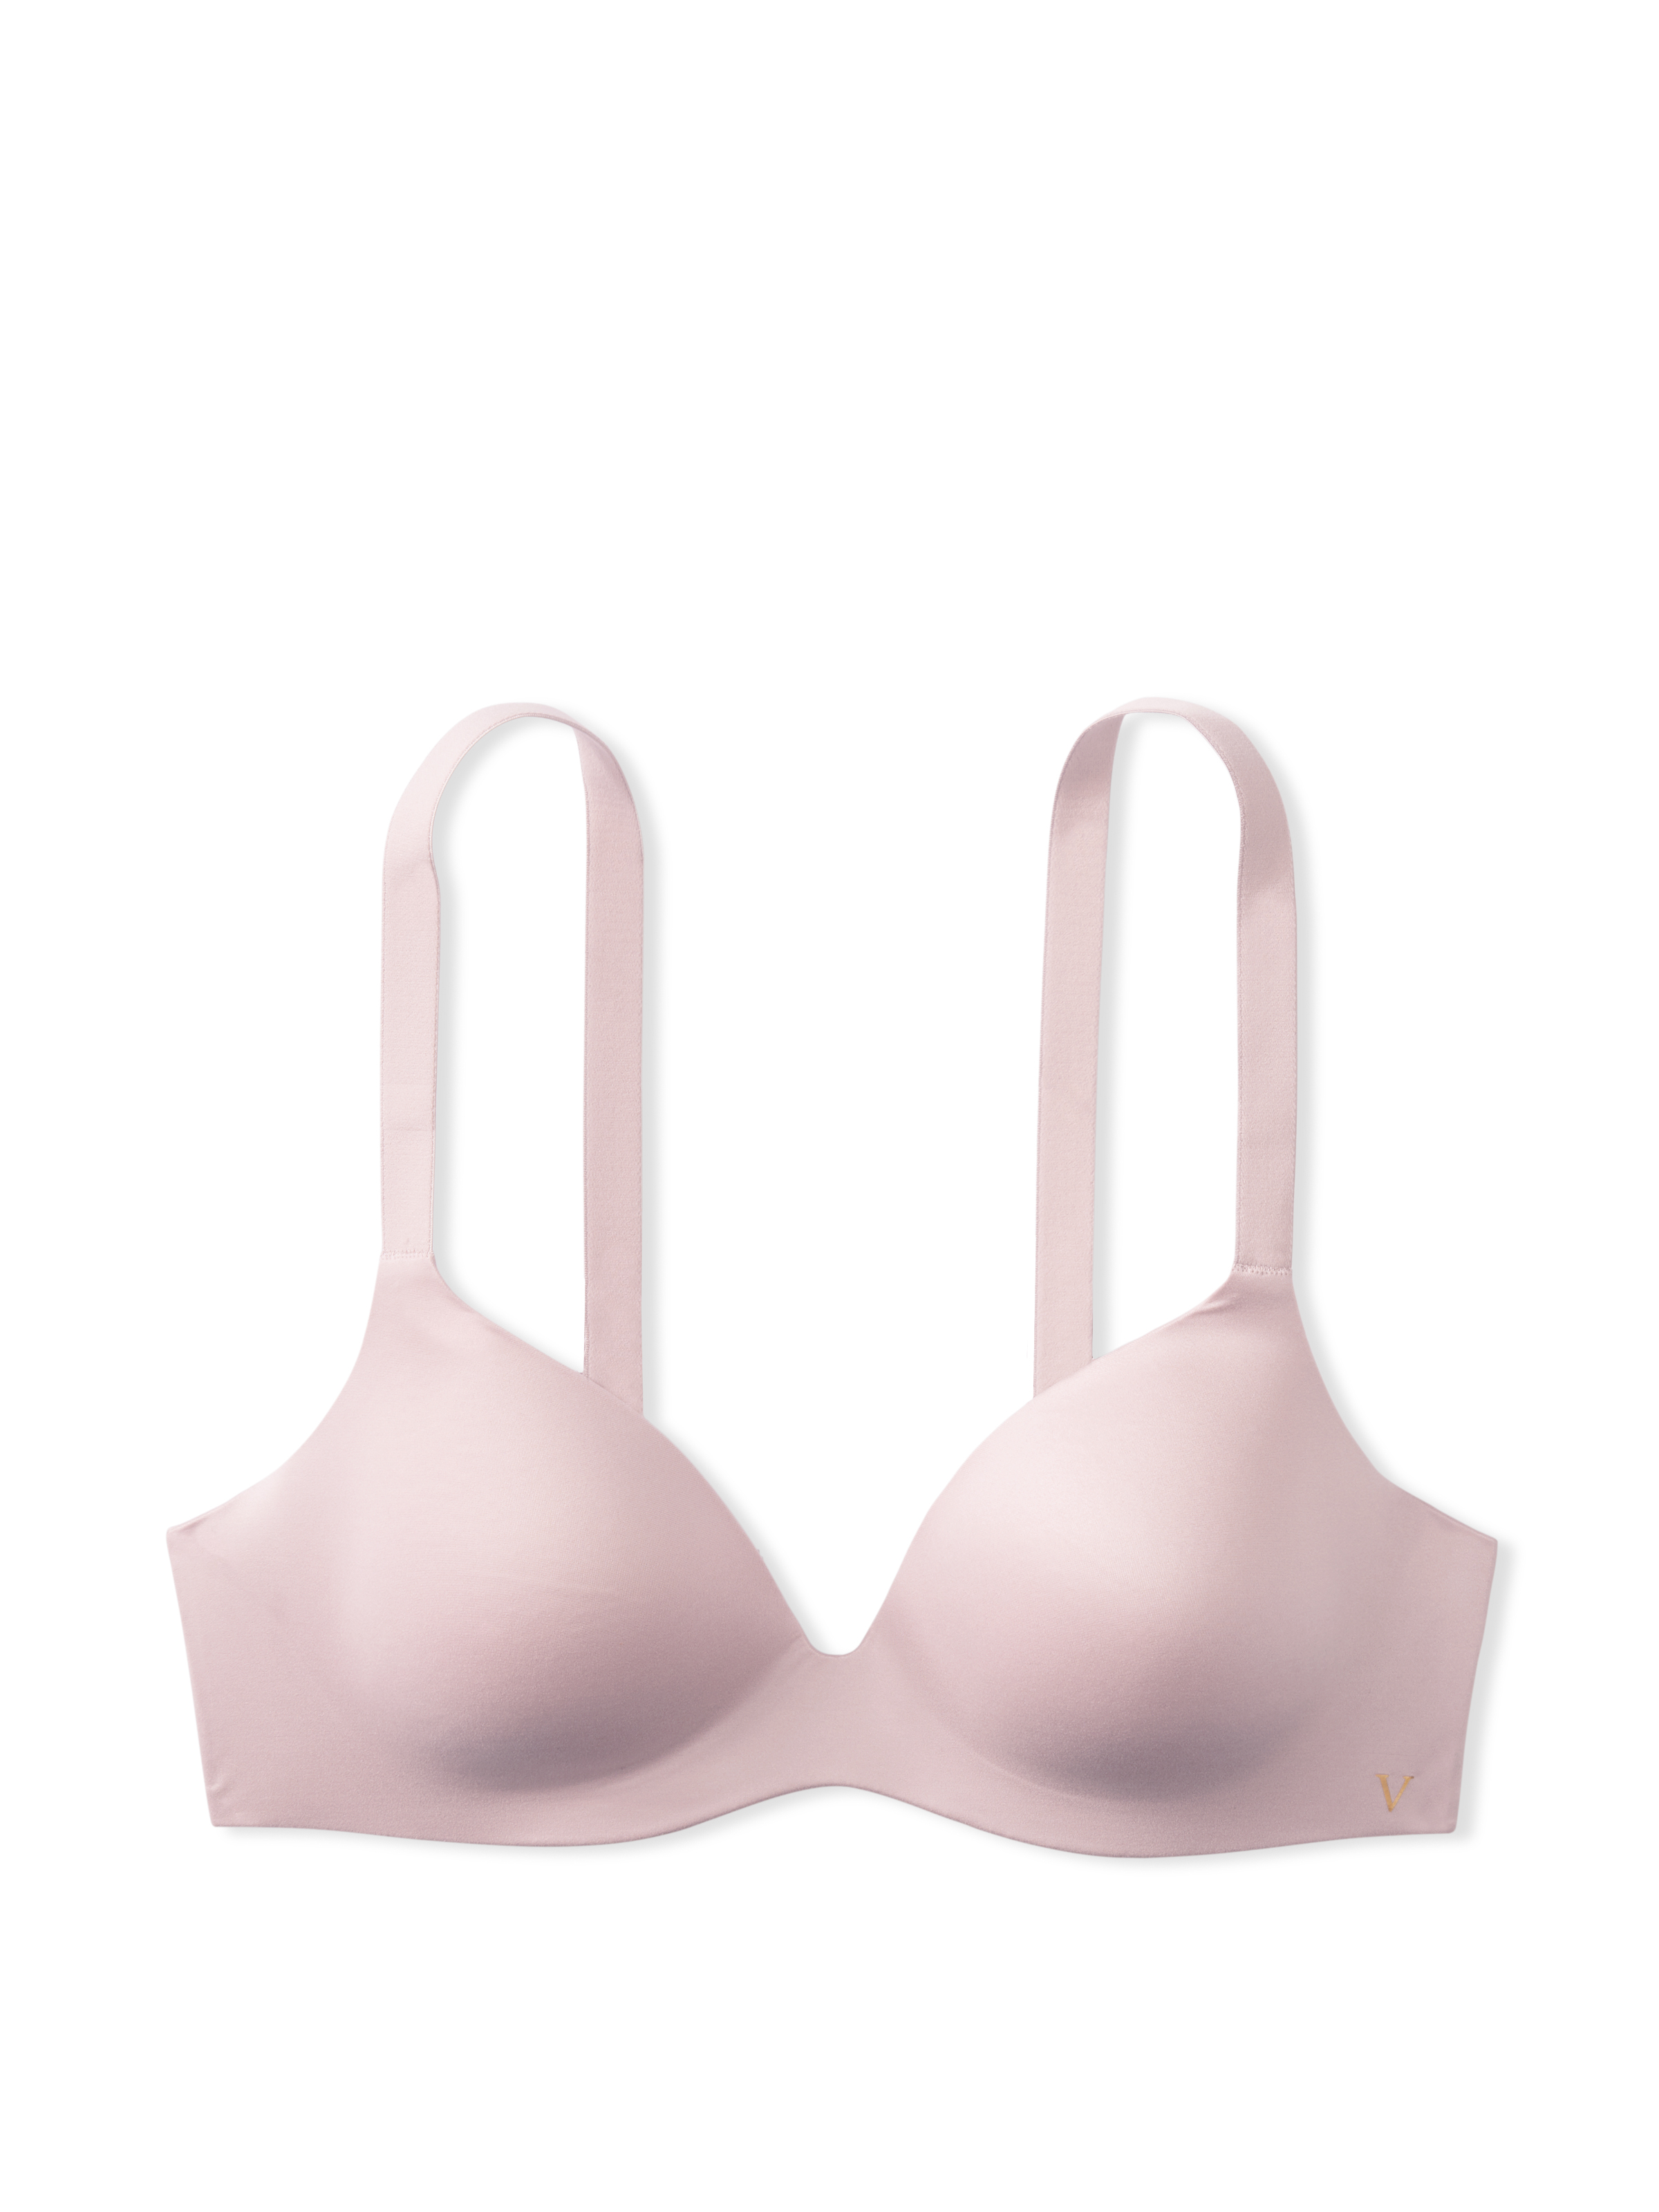 Victoria's Secret Purest Pink 38D VS Bare Infinity Flex Full Coverage Bra  VS - Simpson Advanced Chiropractic & Medical Center